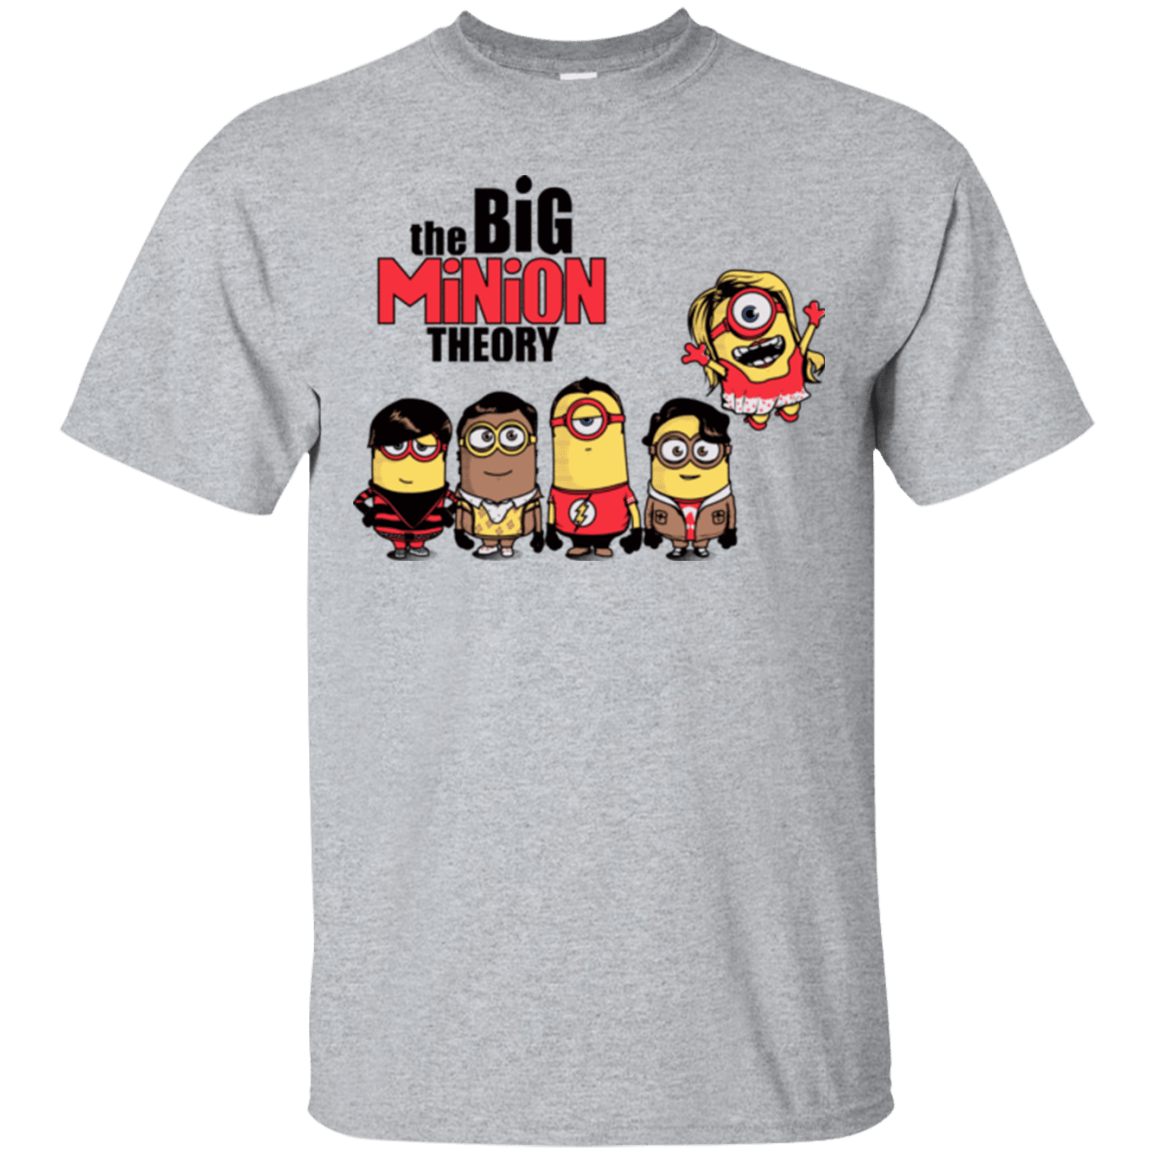 T-Shirts Sport Grey / Small THE BIG MINION THEORY T-Shirt